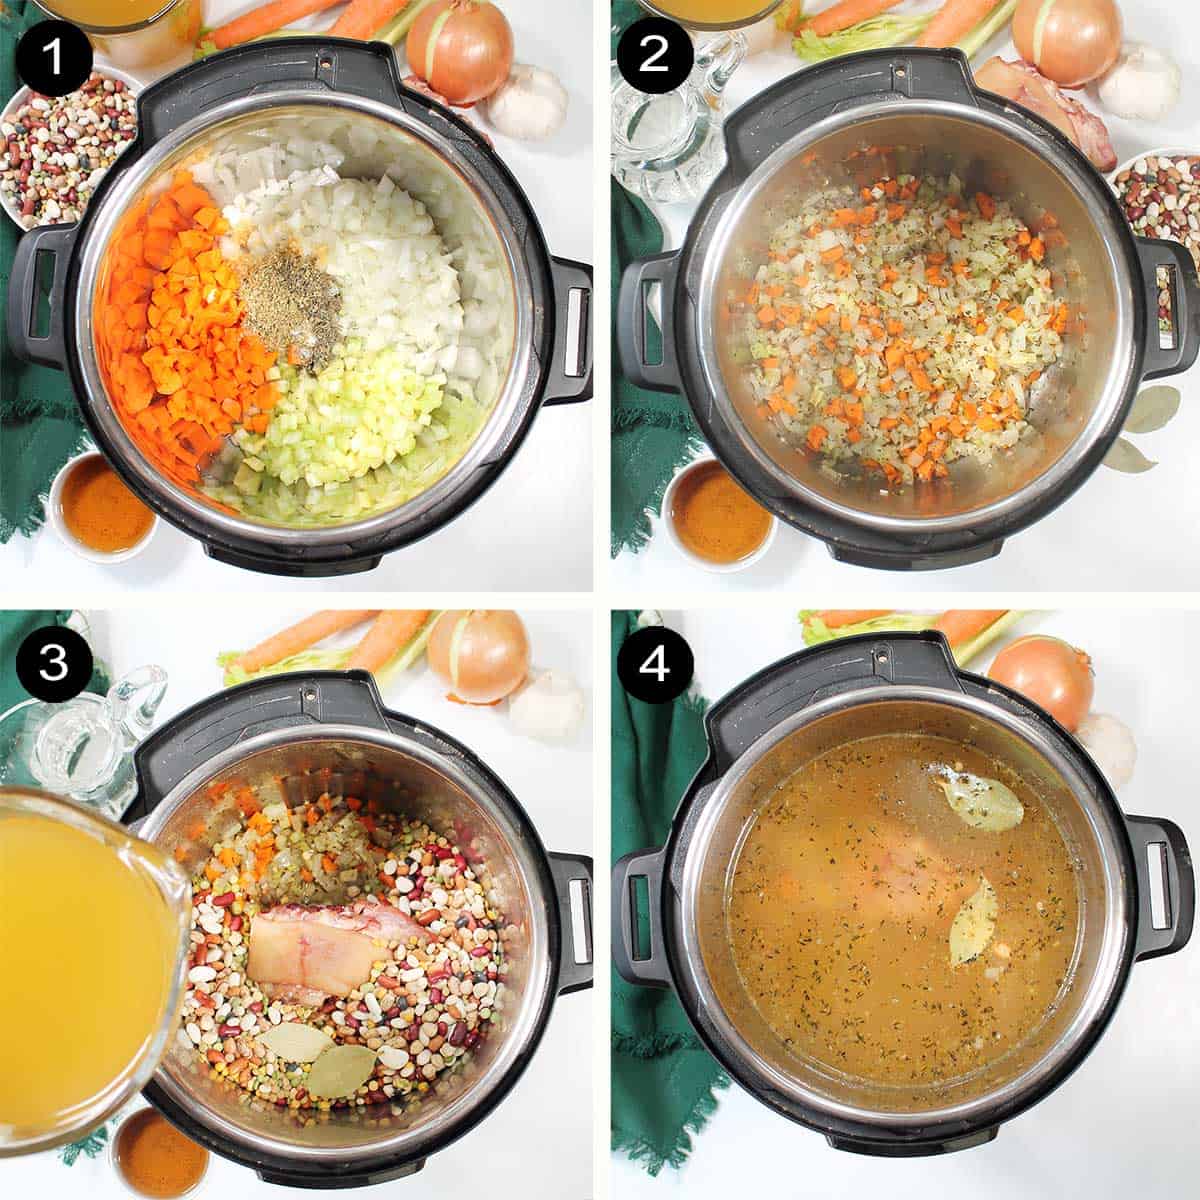 Steps 1-4 to prepare bean soup.